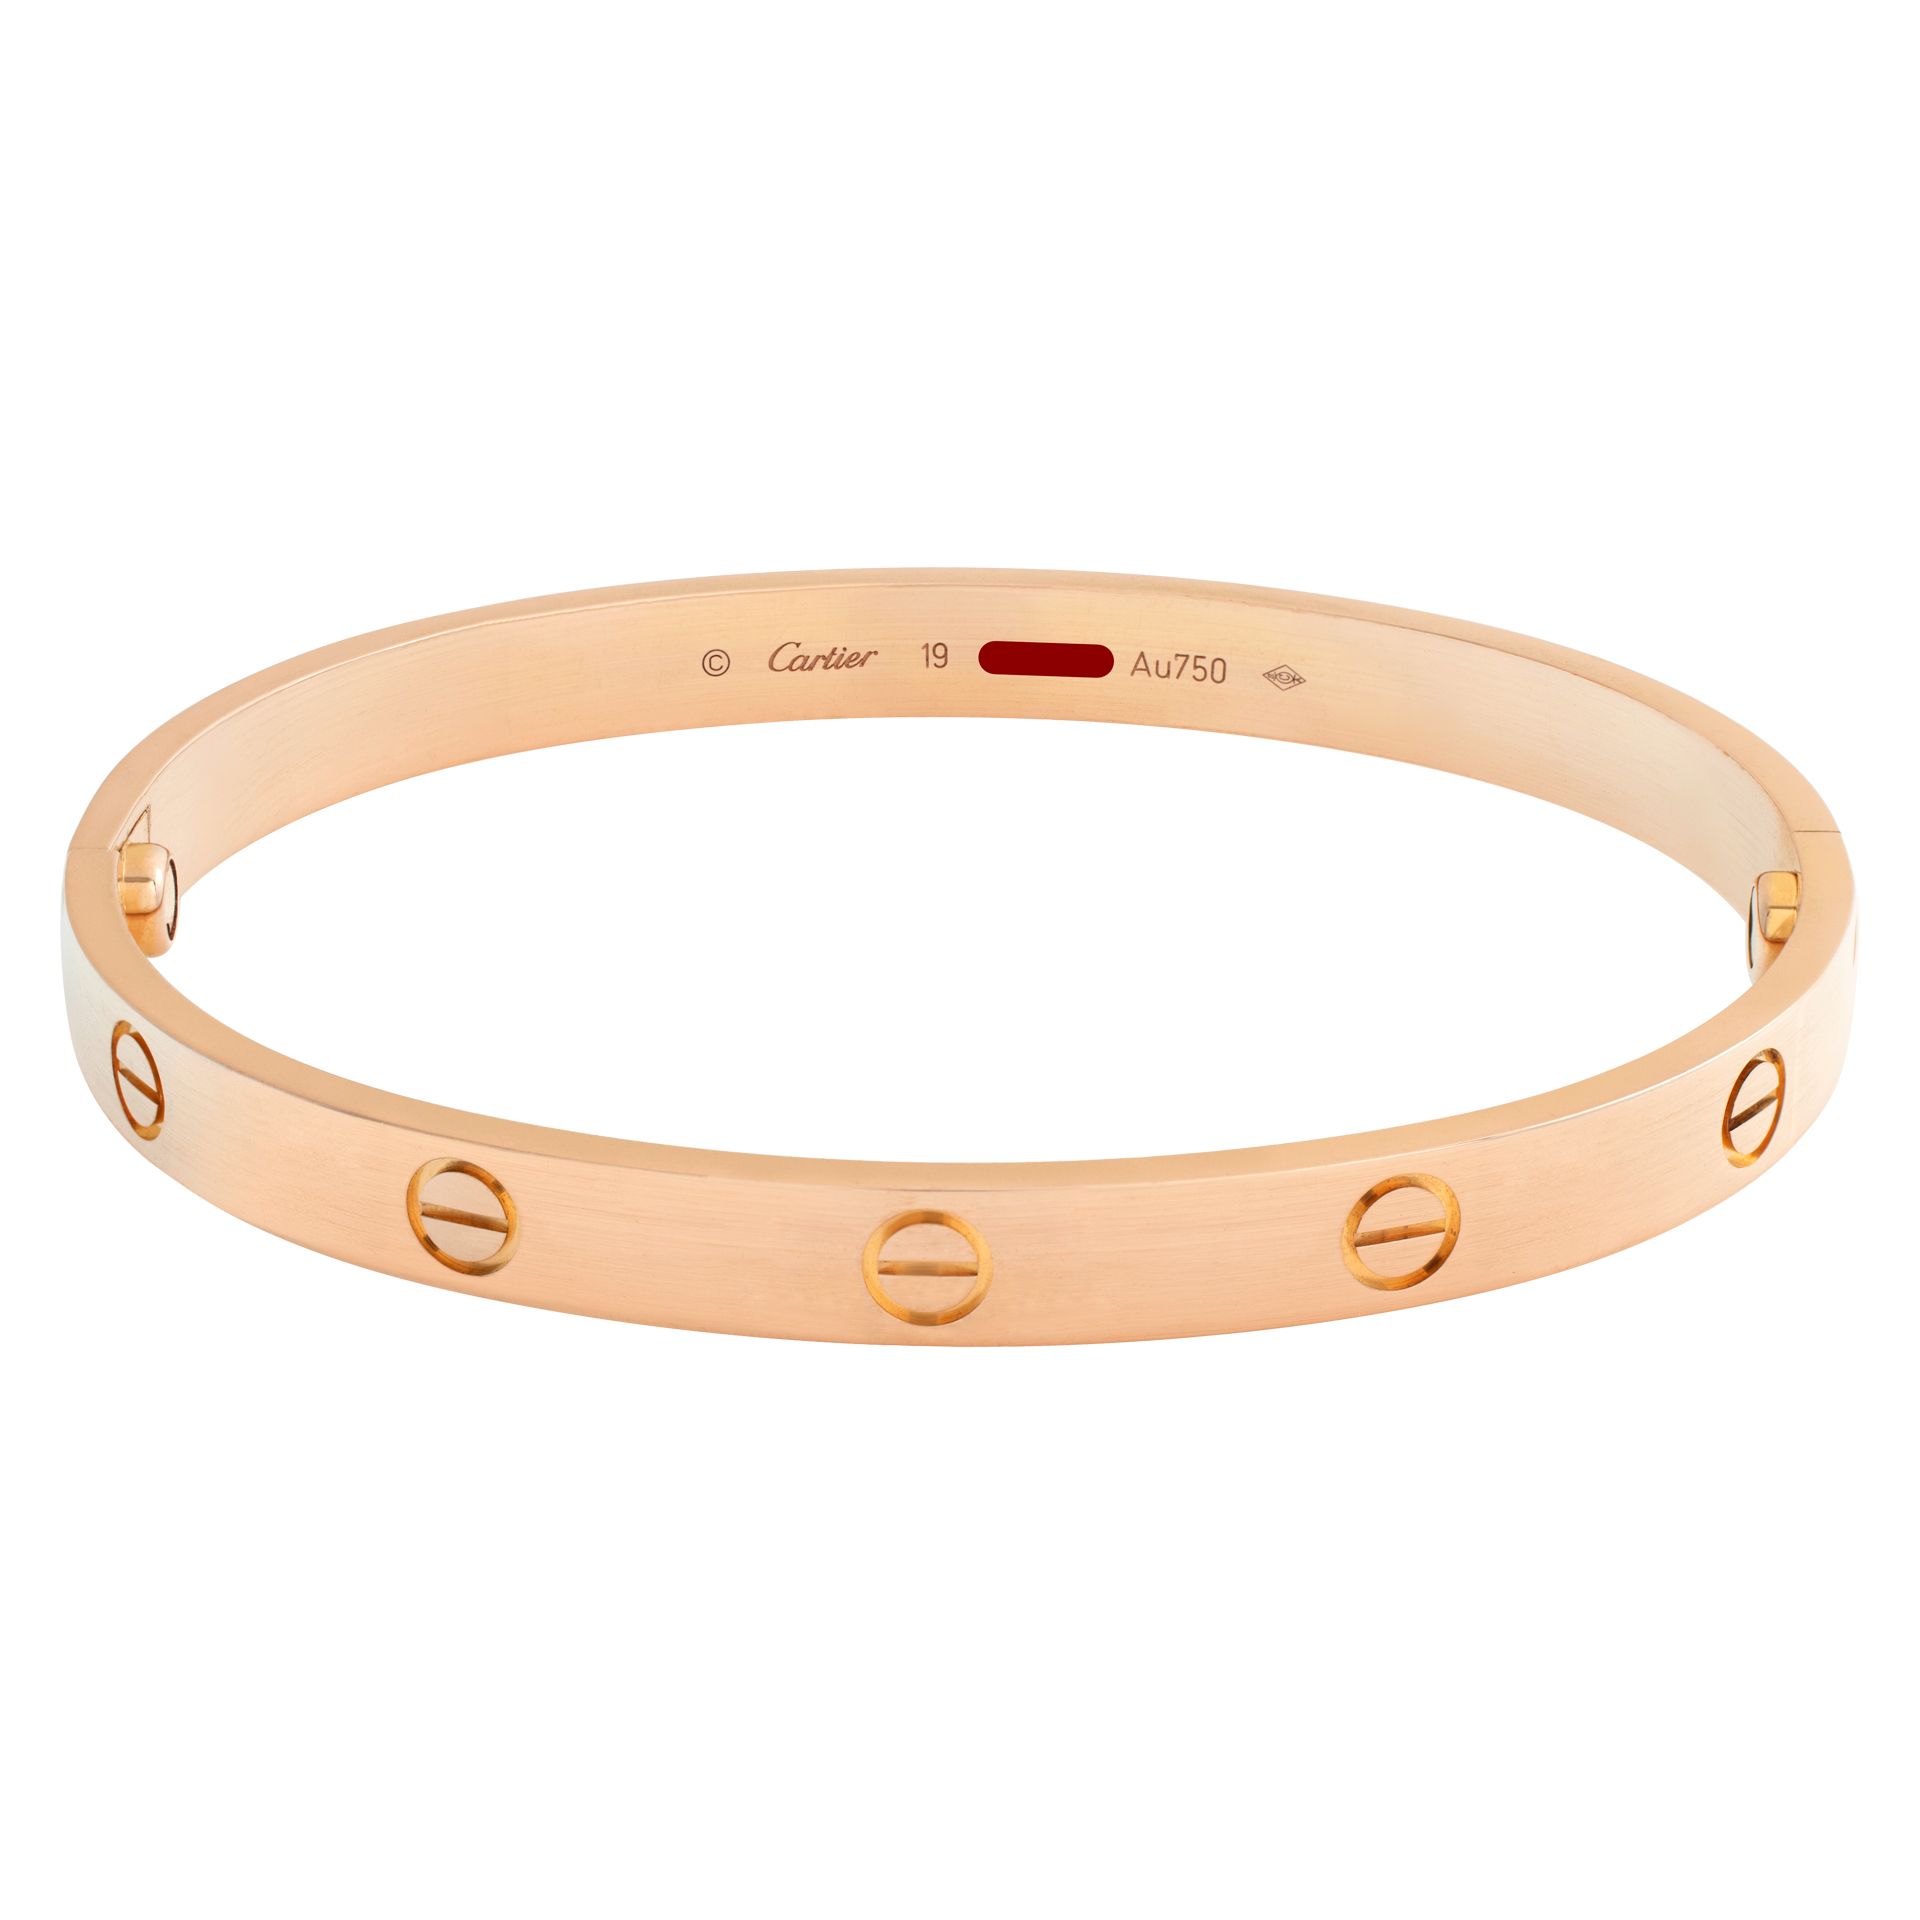 Cartier Love bracelet 18k rose gold size 19